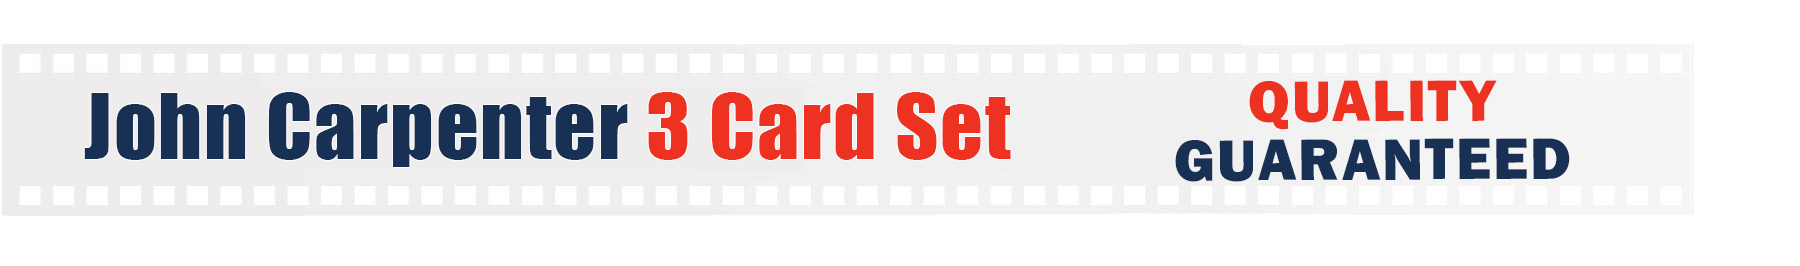 John Carpenter 3 Card Set